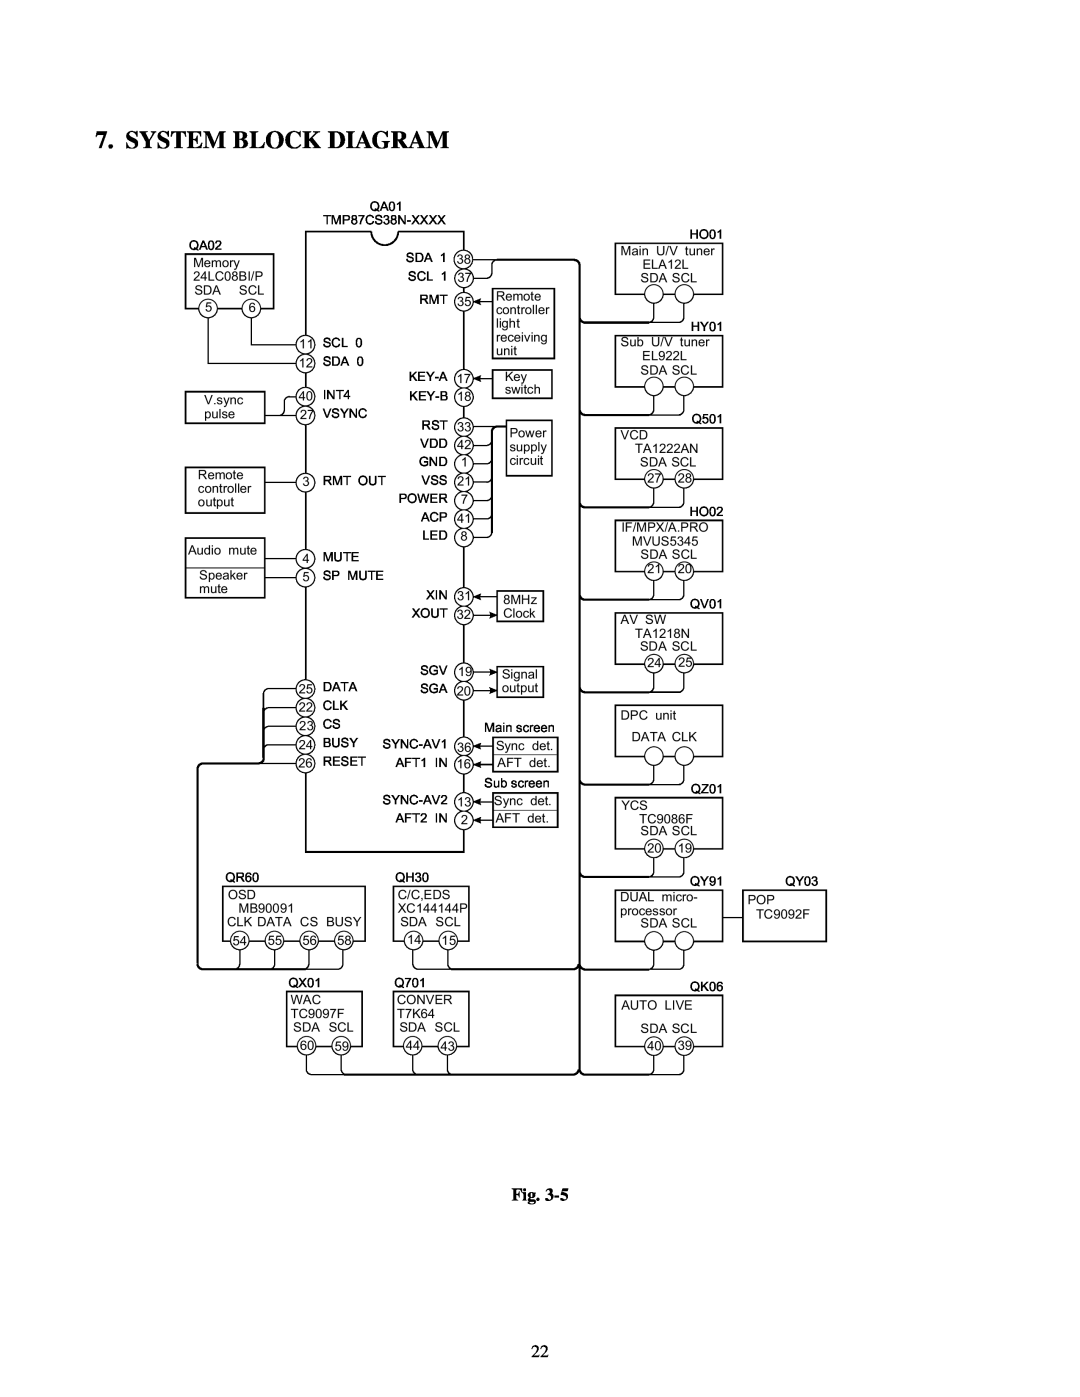 Toshiba TW40F80 manual System Block Diagram 